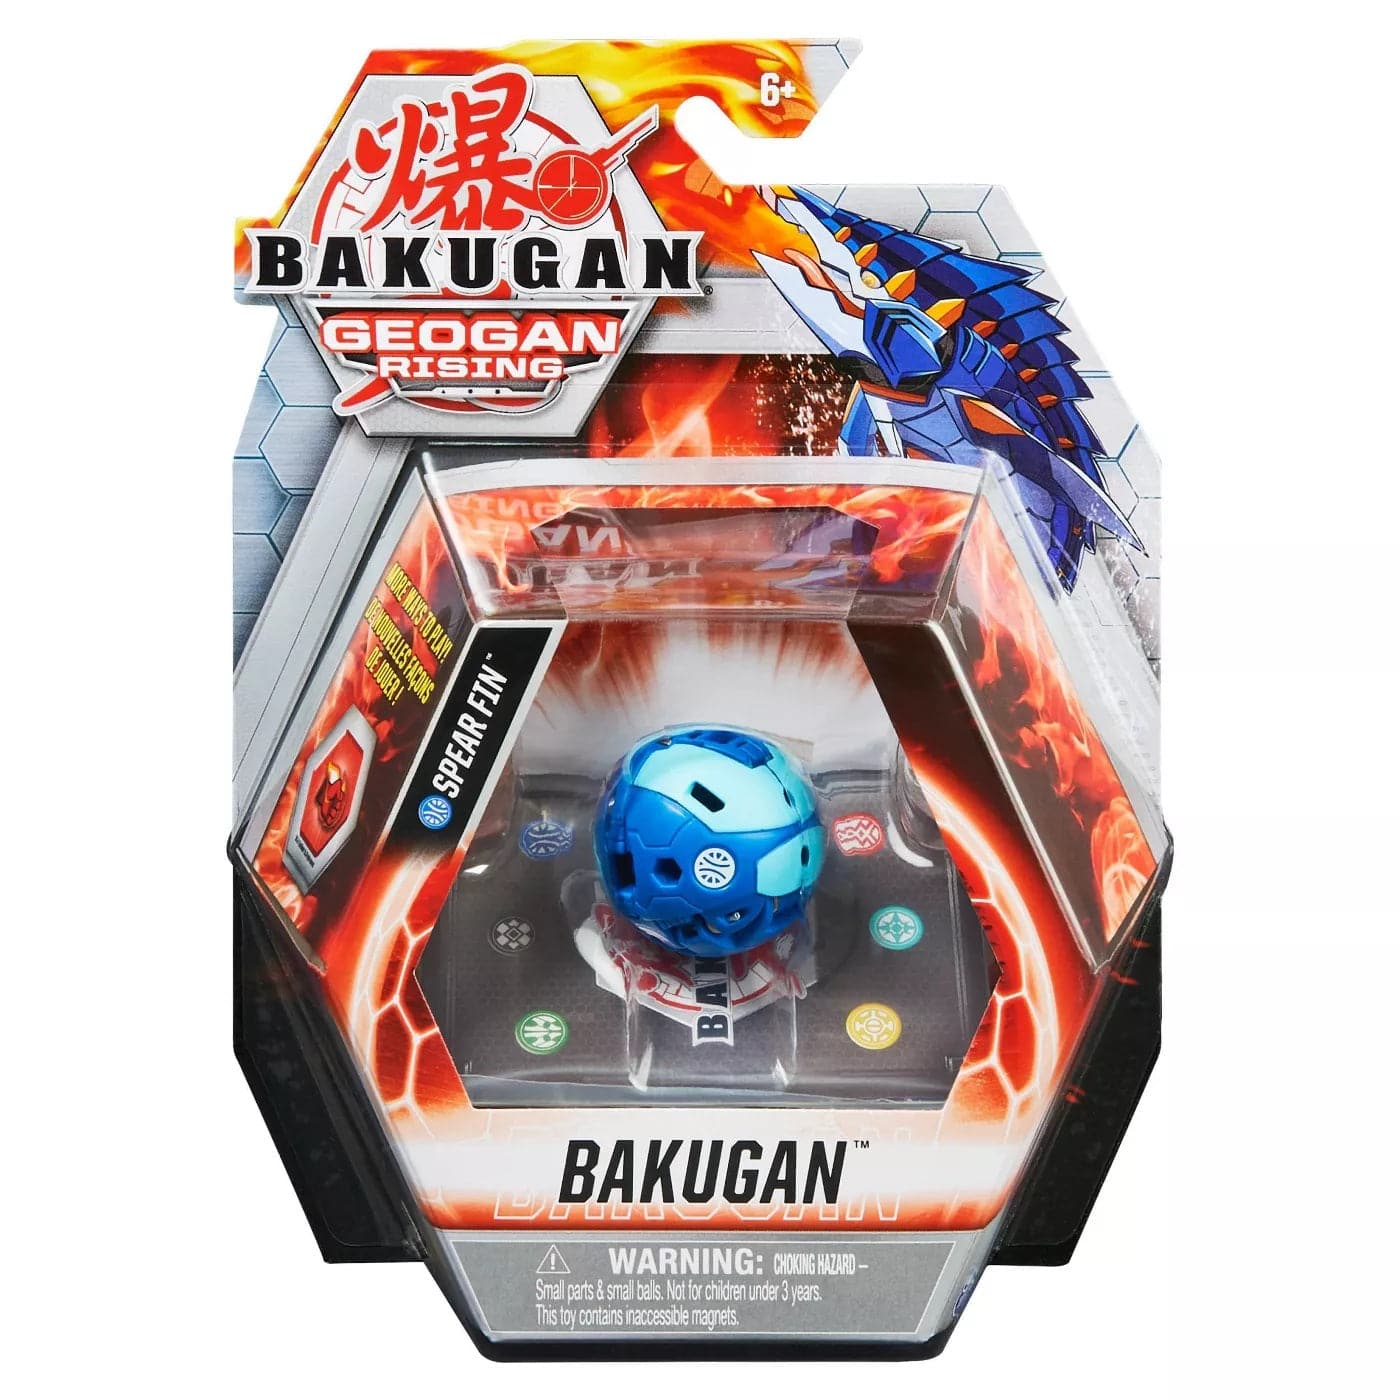 How to play bakugan - Bakugan